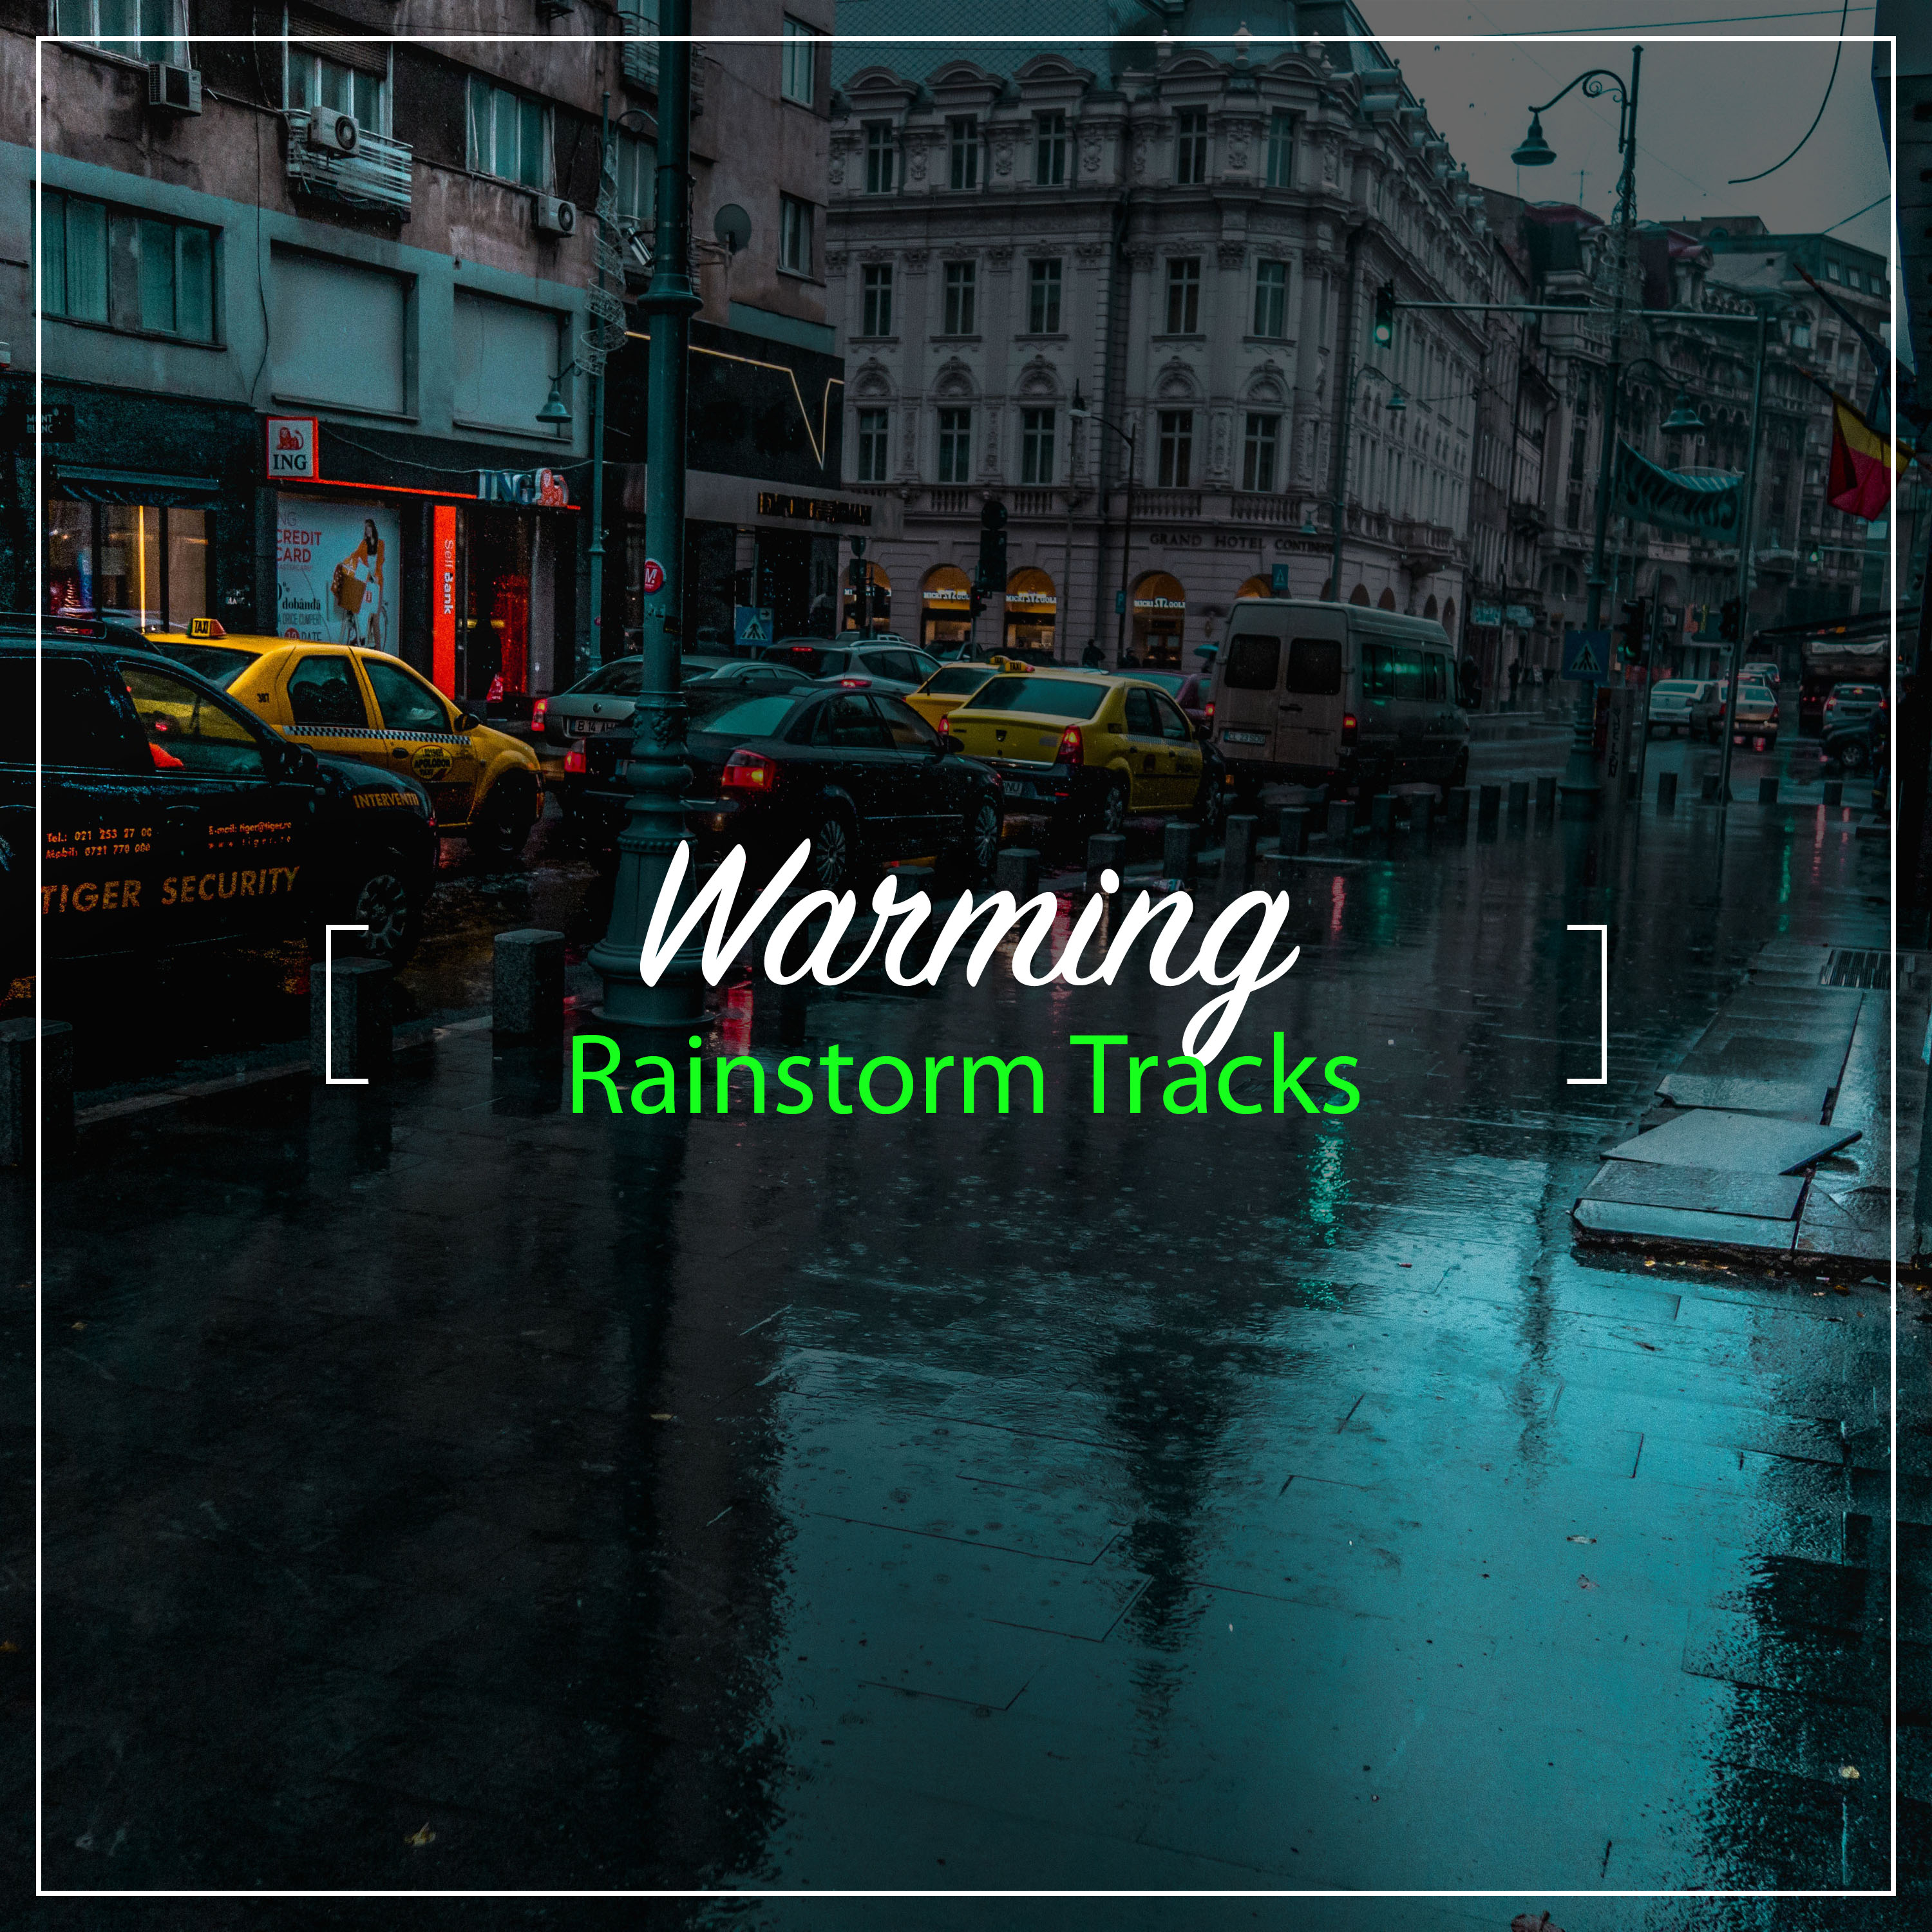 #2019 Warming Rainstorm Tracks